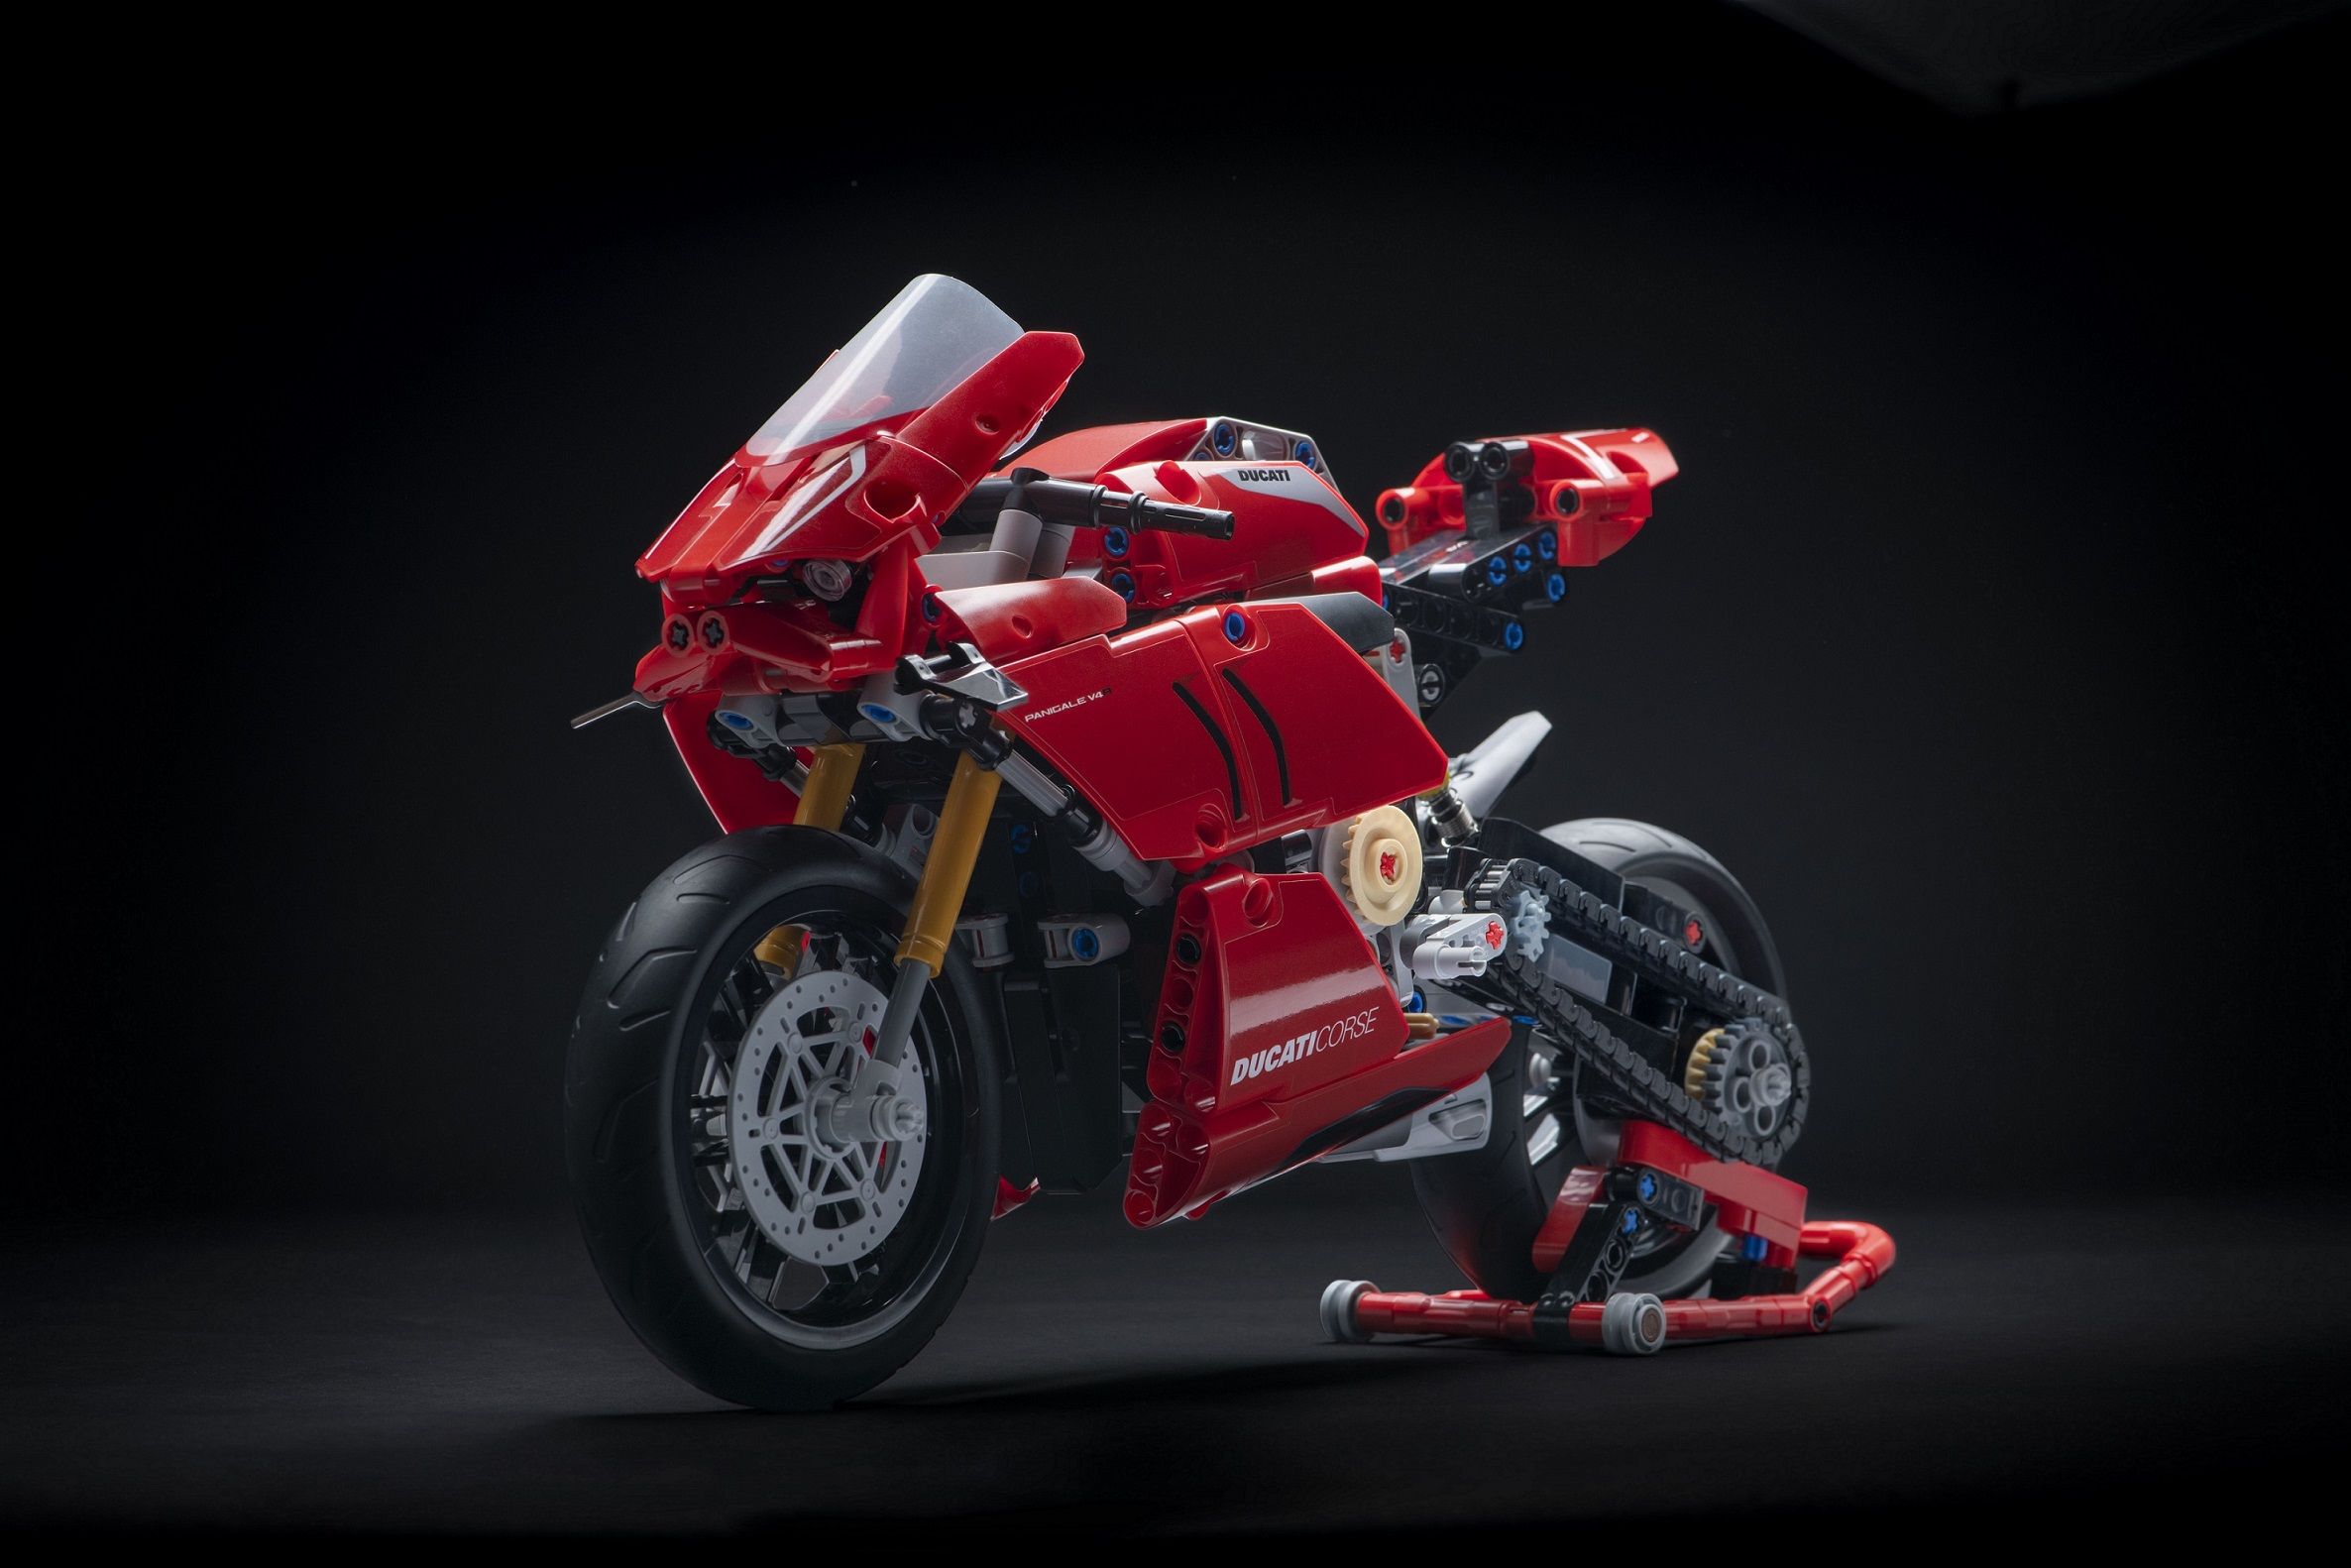 Ducati Panigale V4 R Lego set